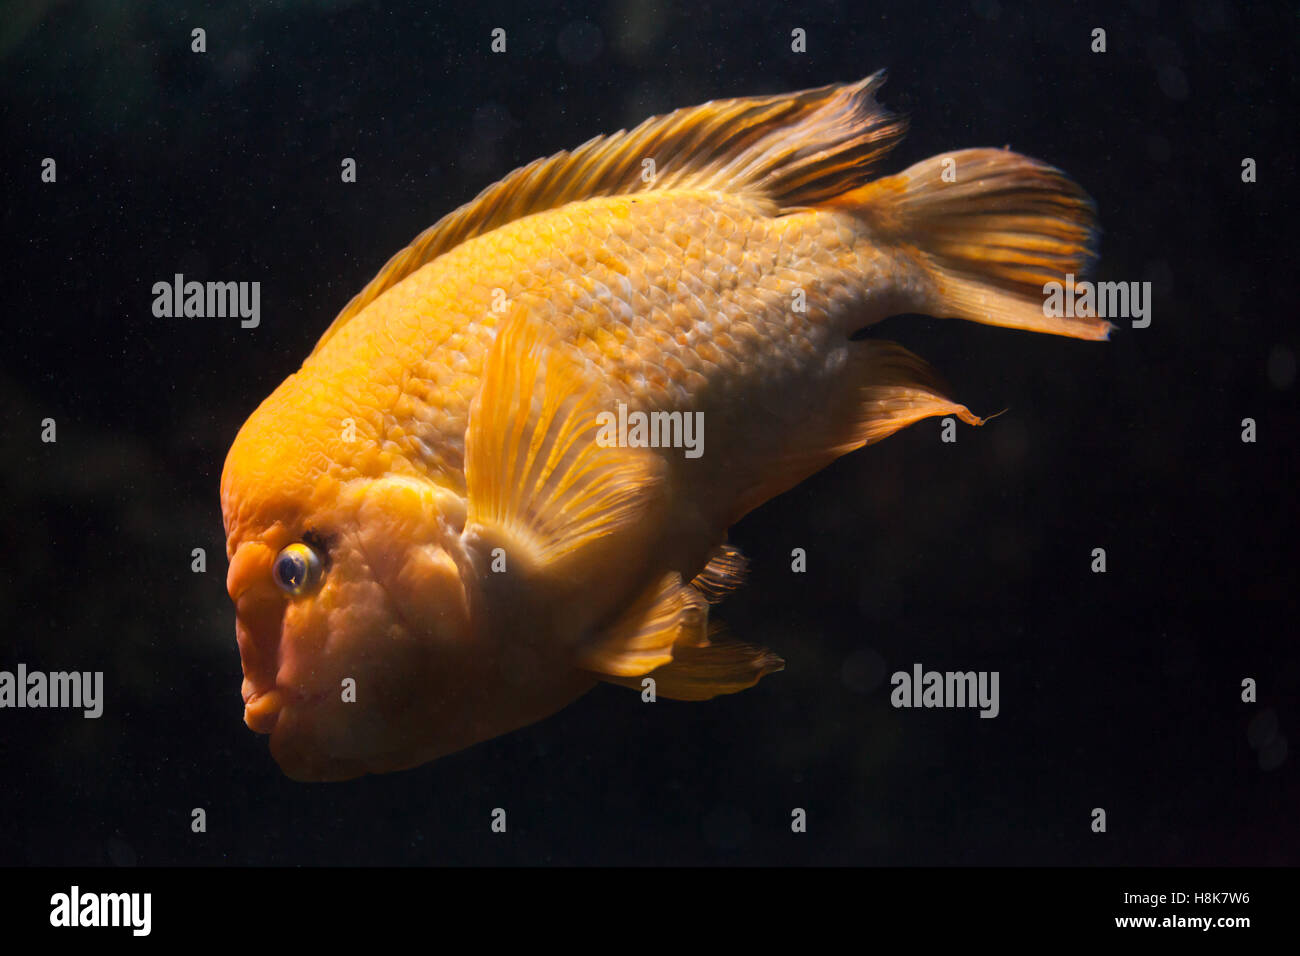 Midas cichlid (Amphilophus citrinellus). Freshwater fish. Stock Photo